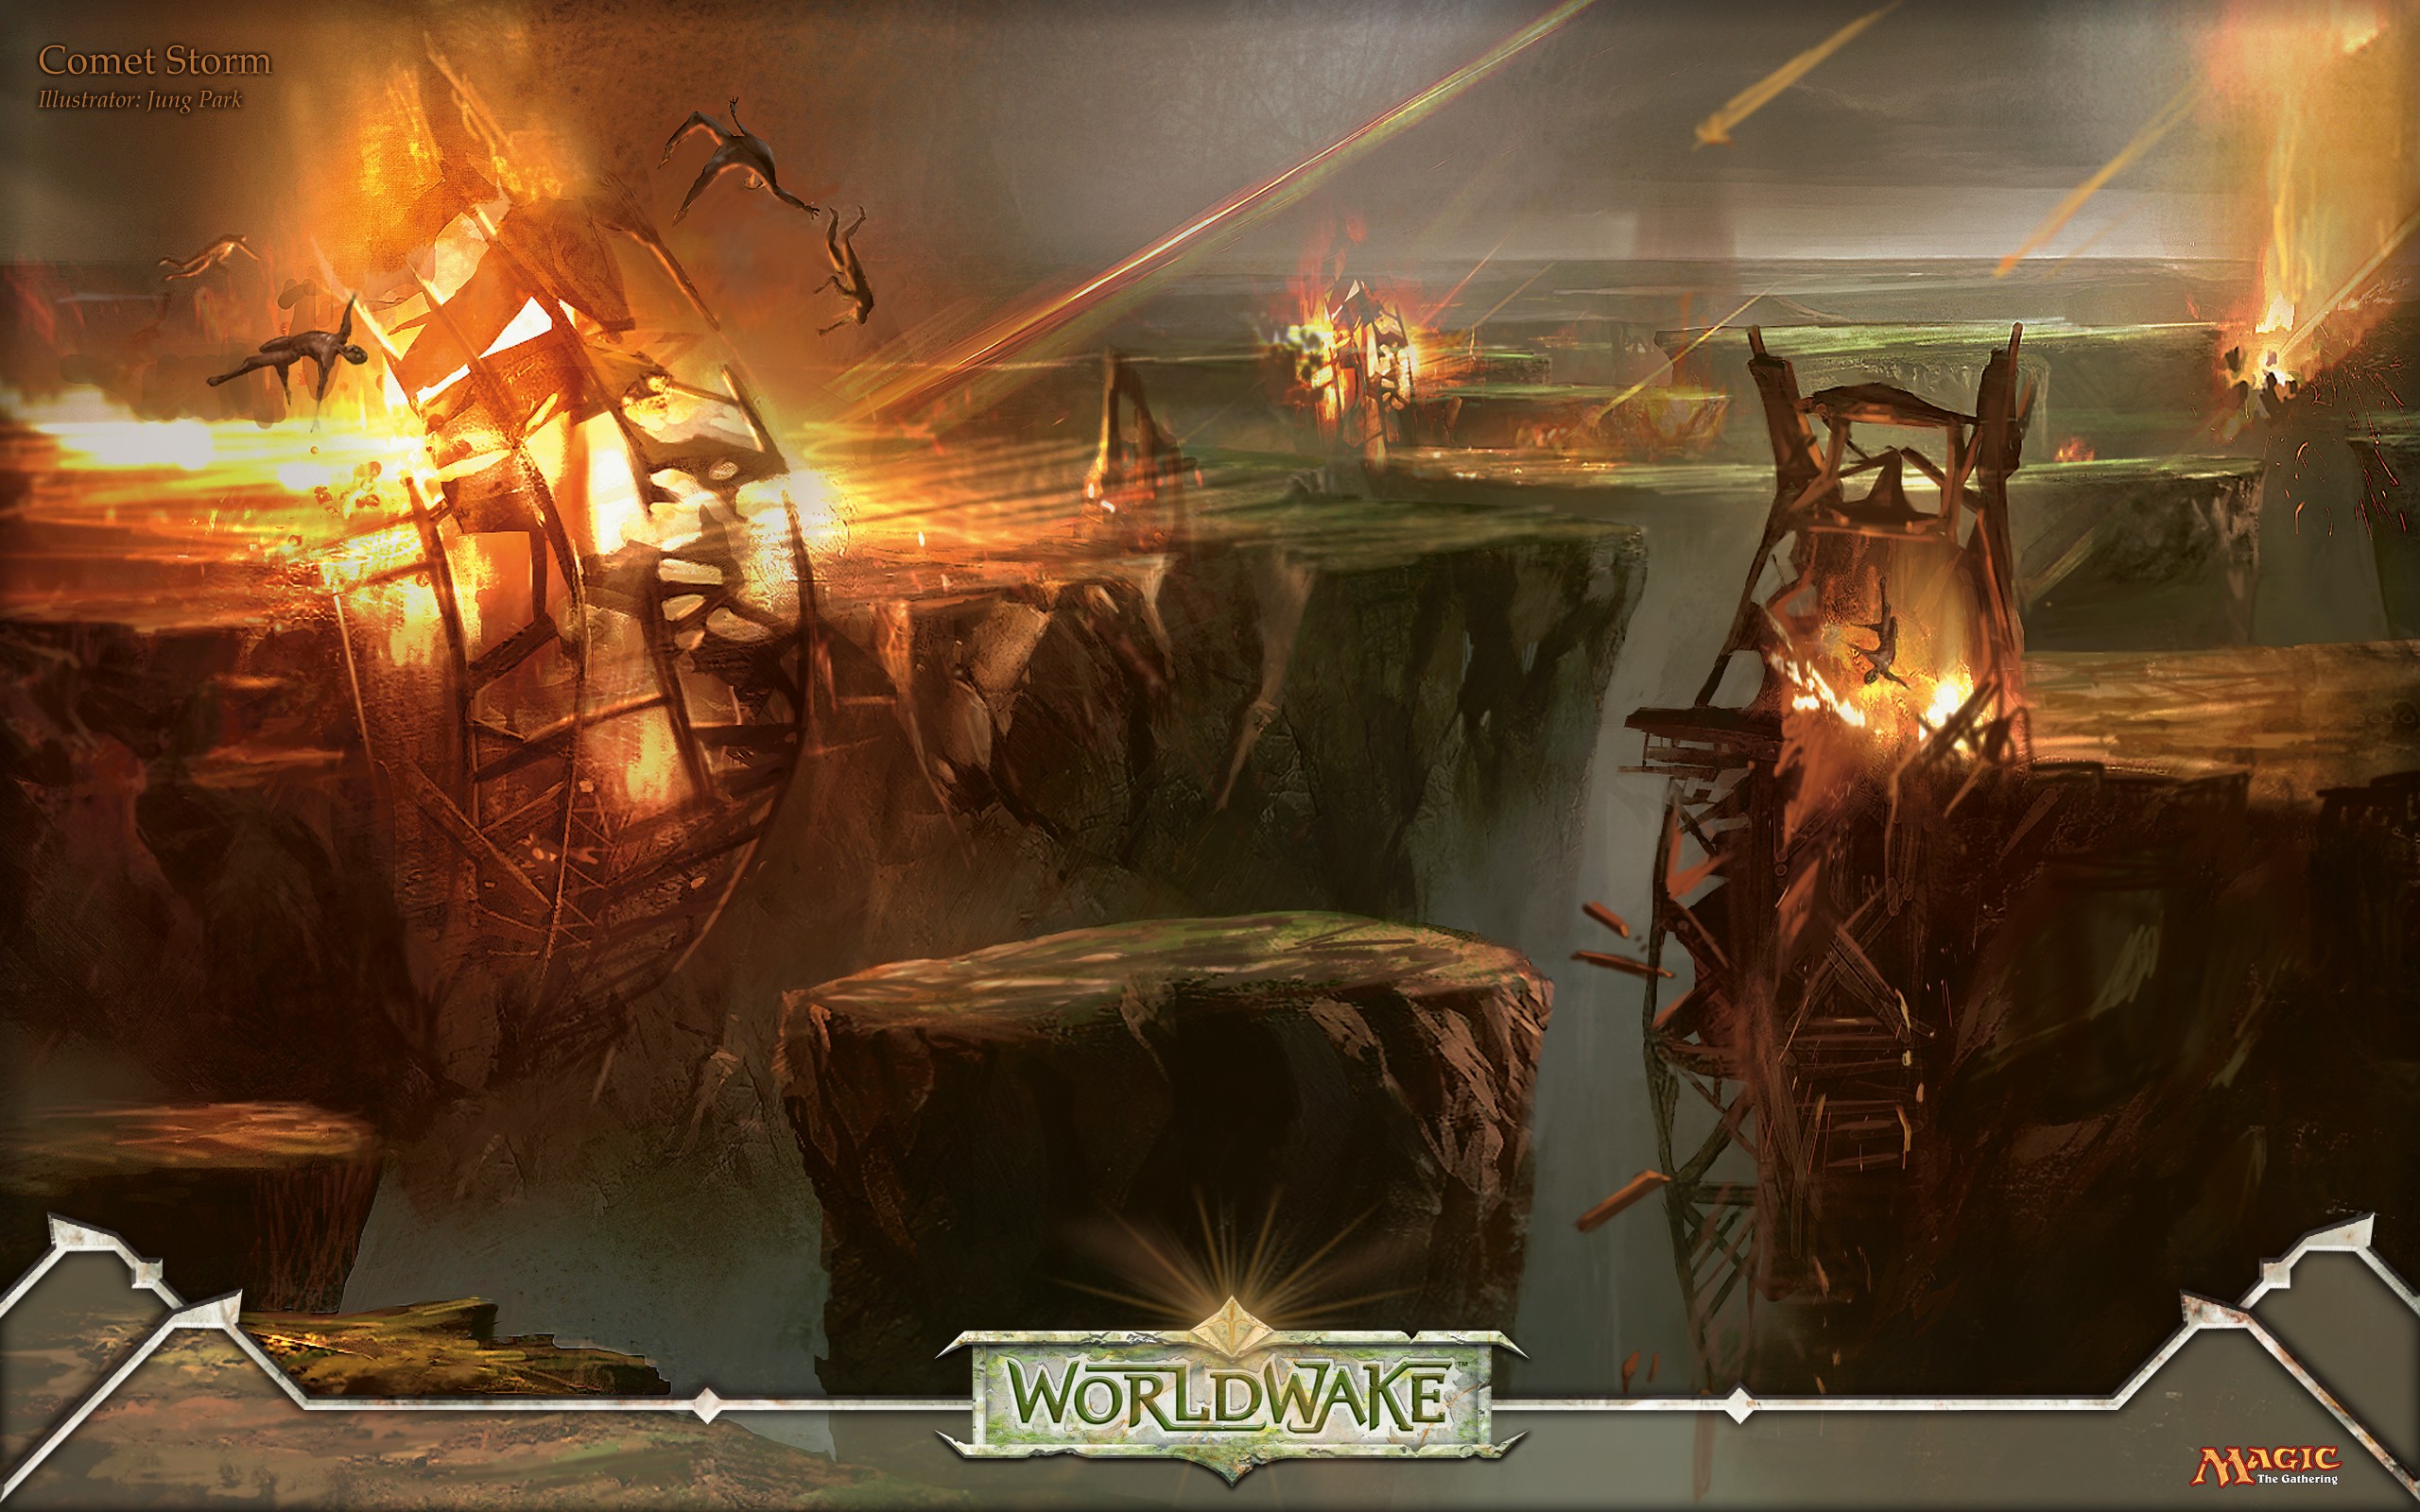 Jung Park's Magic: The Gathering desktop wallpaper featuring a man-made fantasy world.